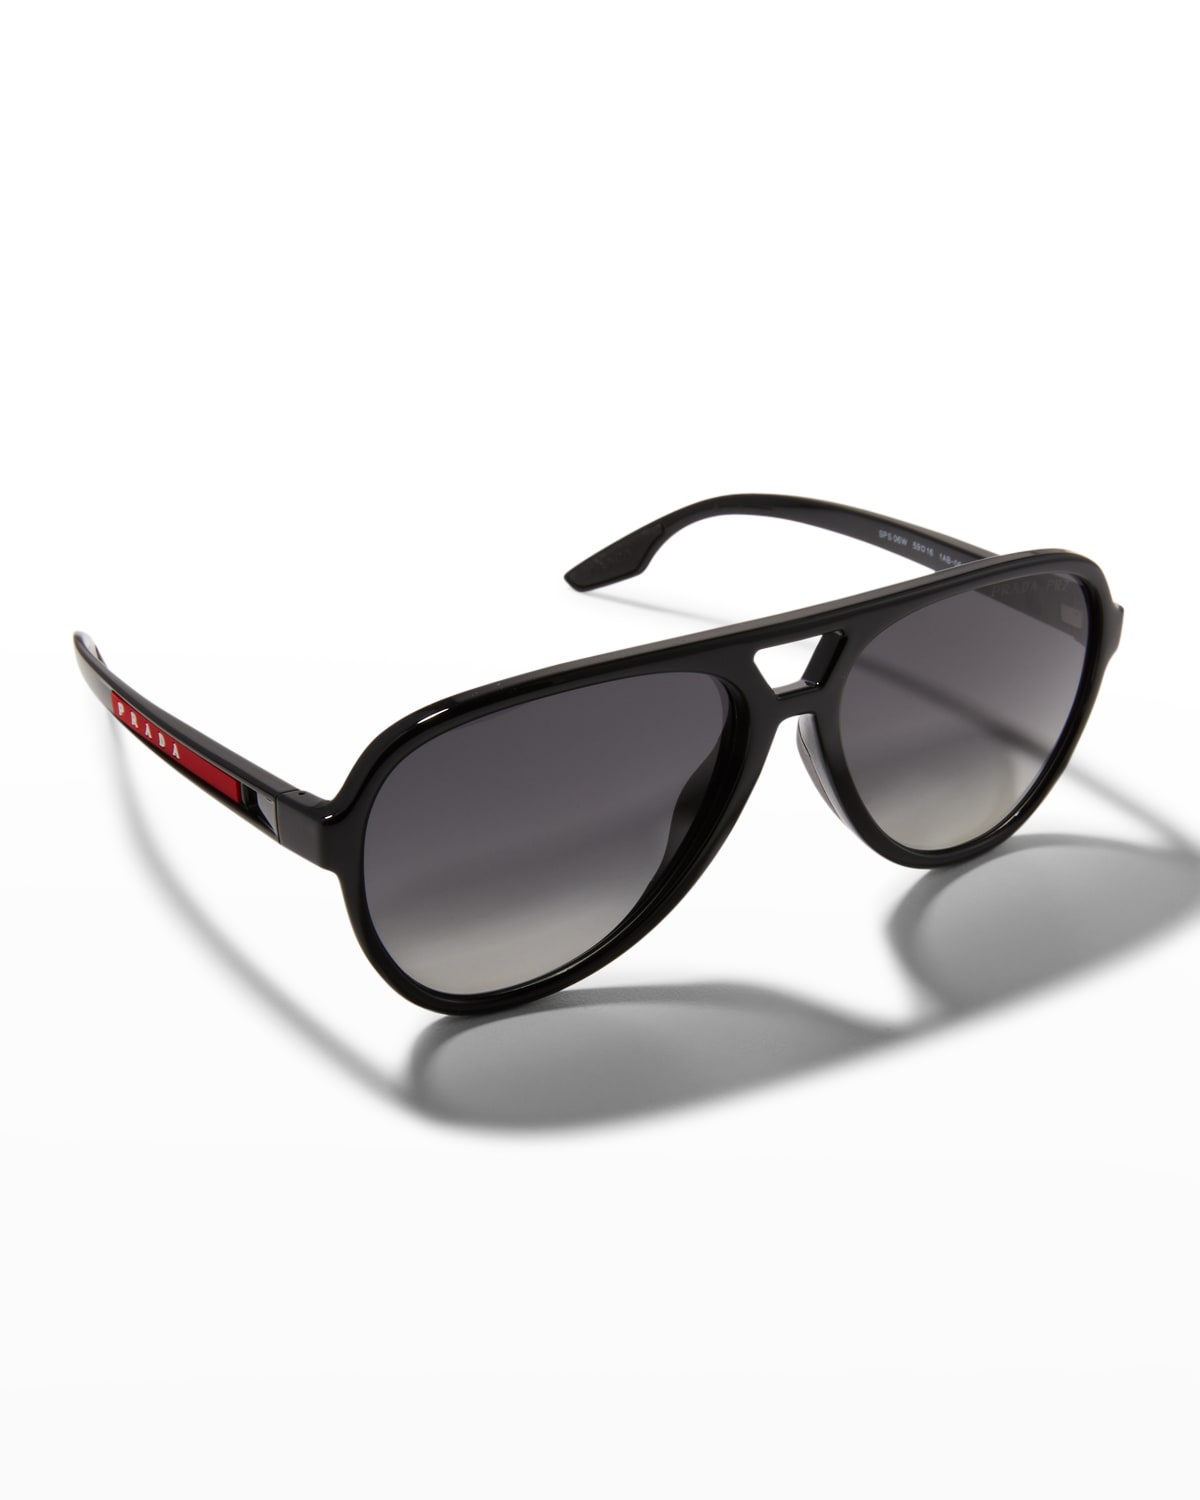 Men's Double-Bridge Gradient Lens Square Sunglasses